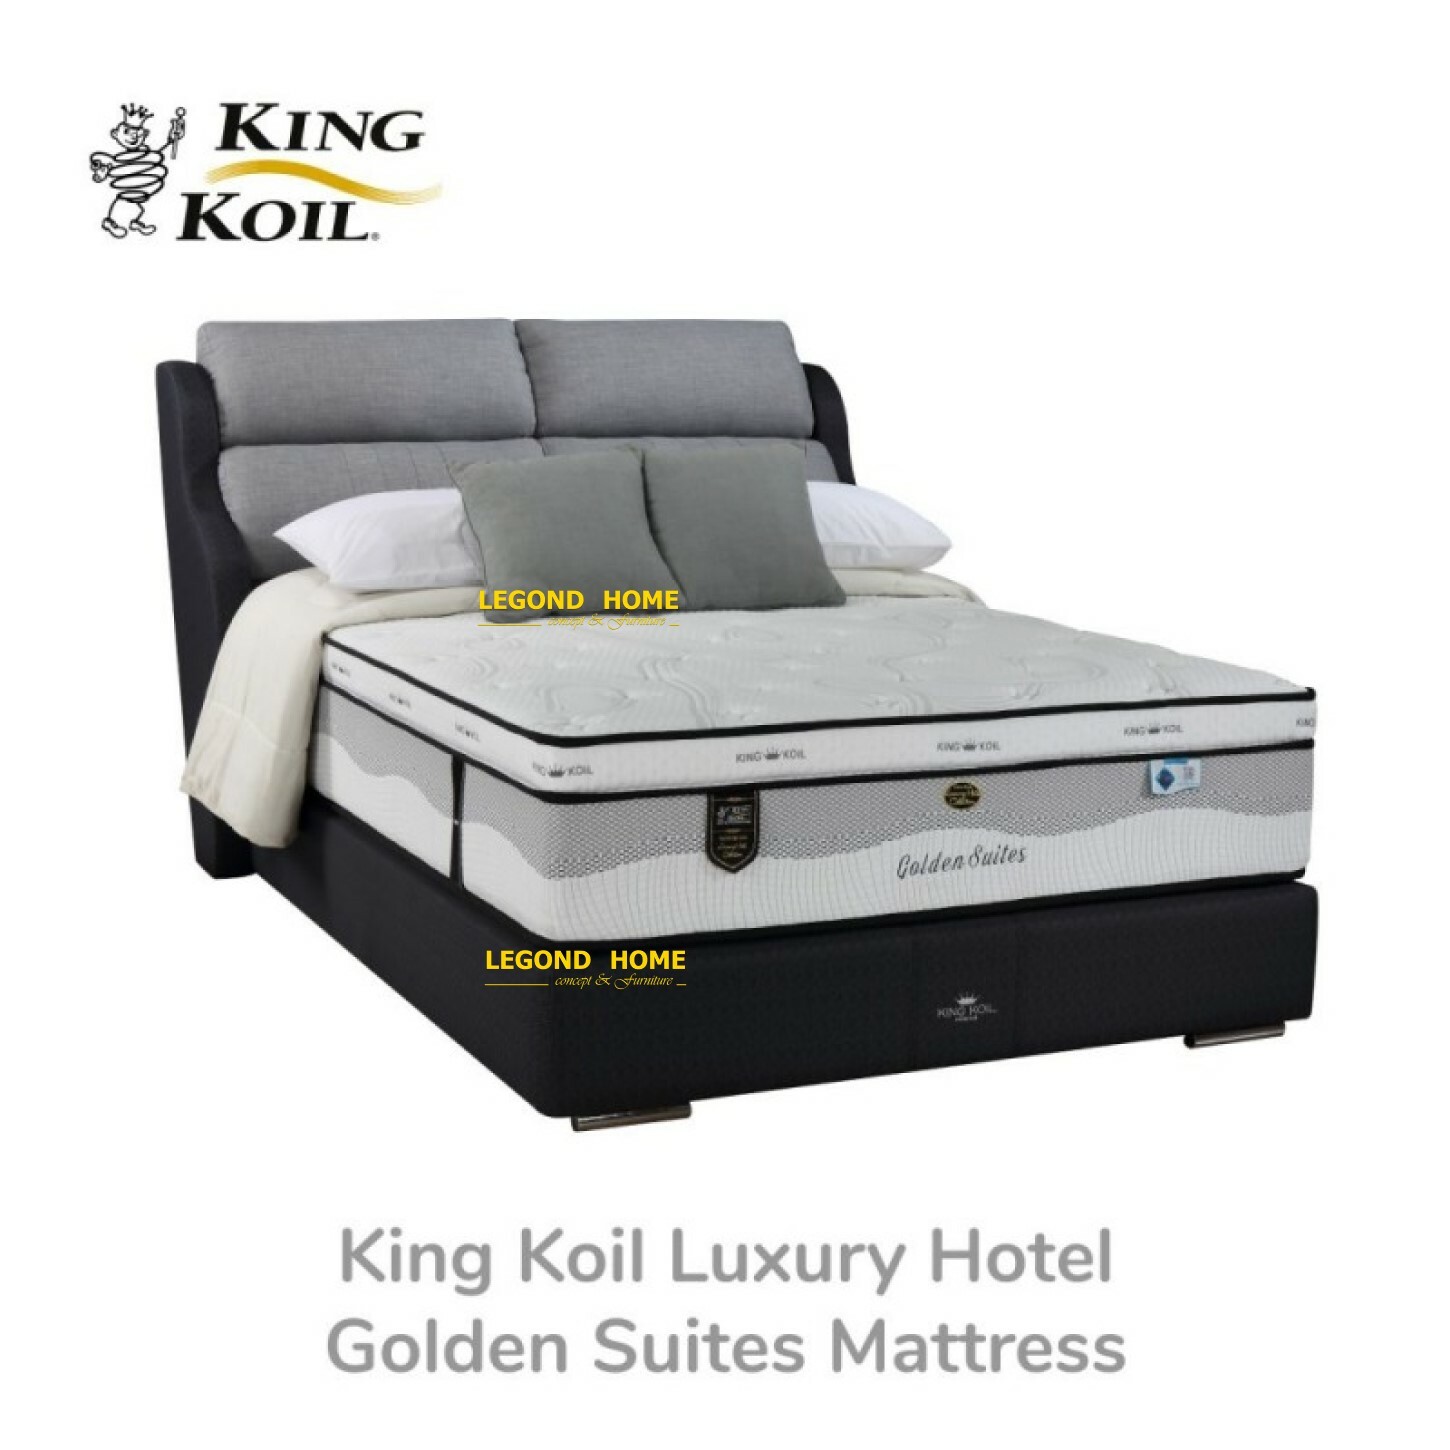 King-Koil-Luxury-Hotel-Golden-Suites-Mattress.jpg